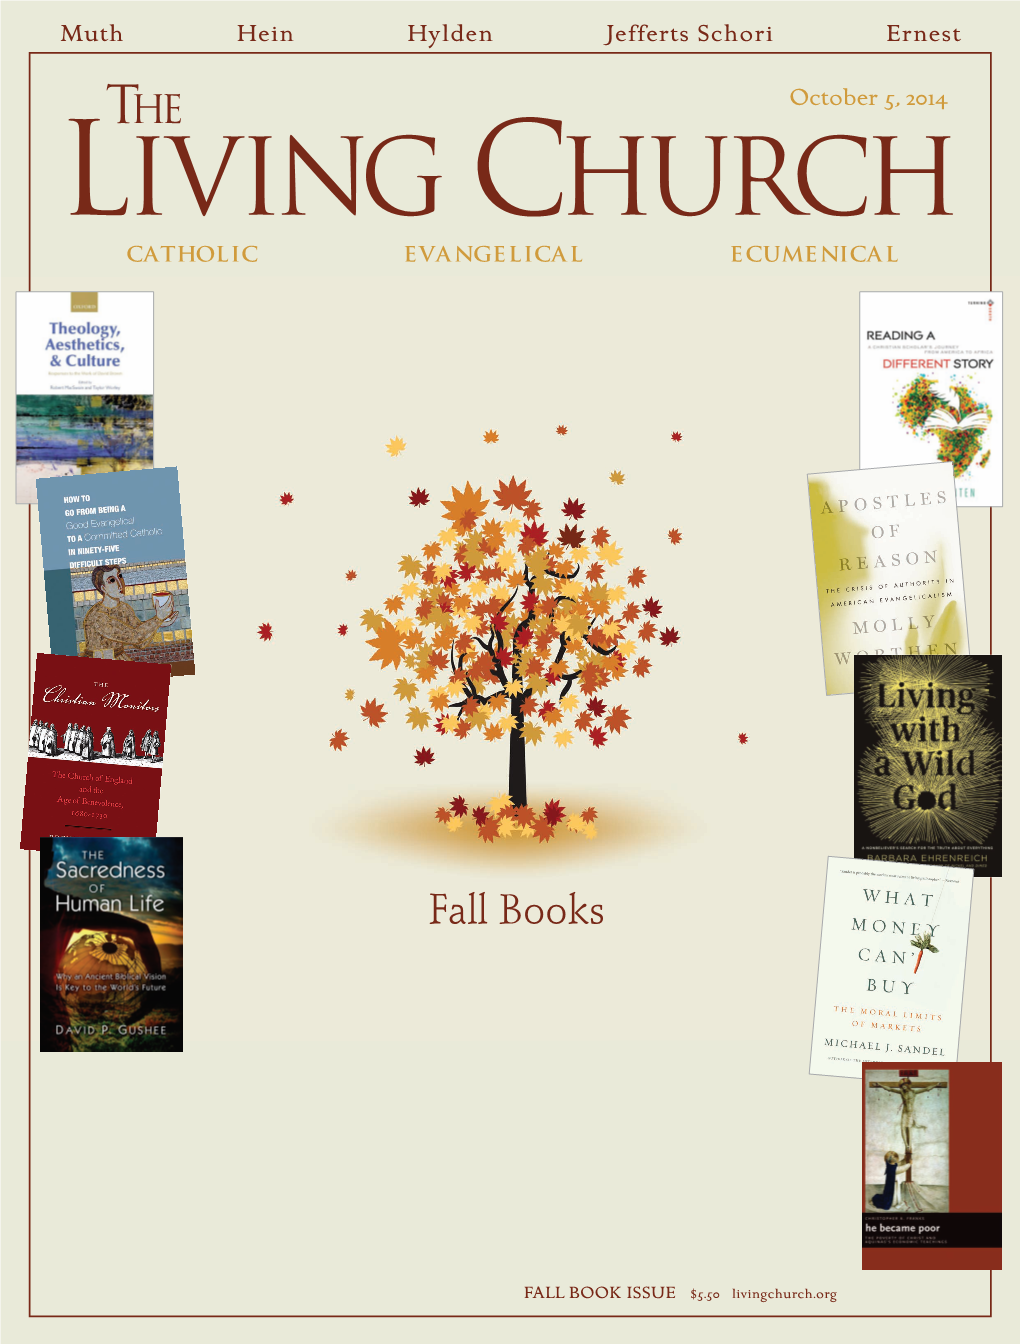 October 5, 2014 the LIVING CHURCH CATHOLIC EVANGELICAL ECUMENICAL